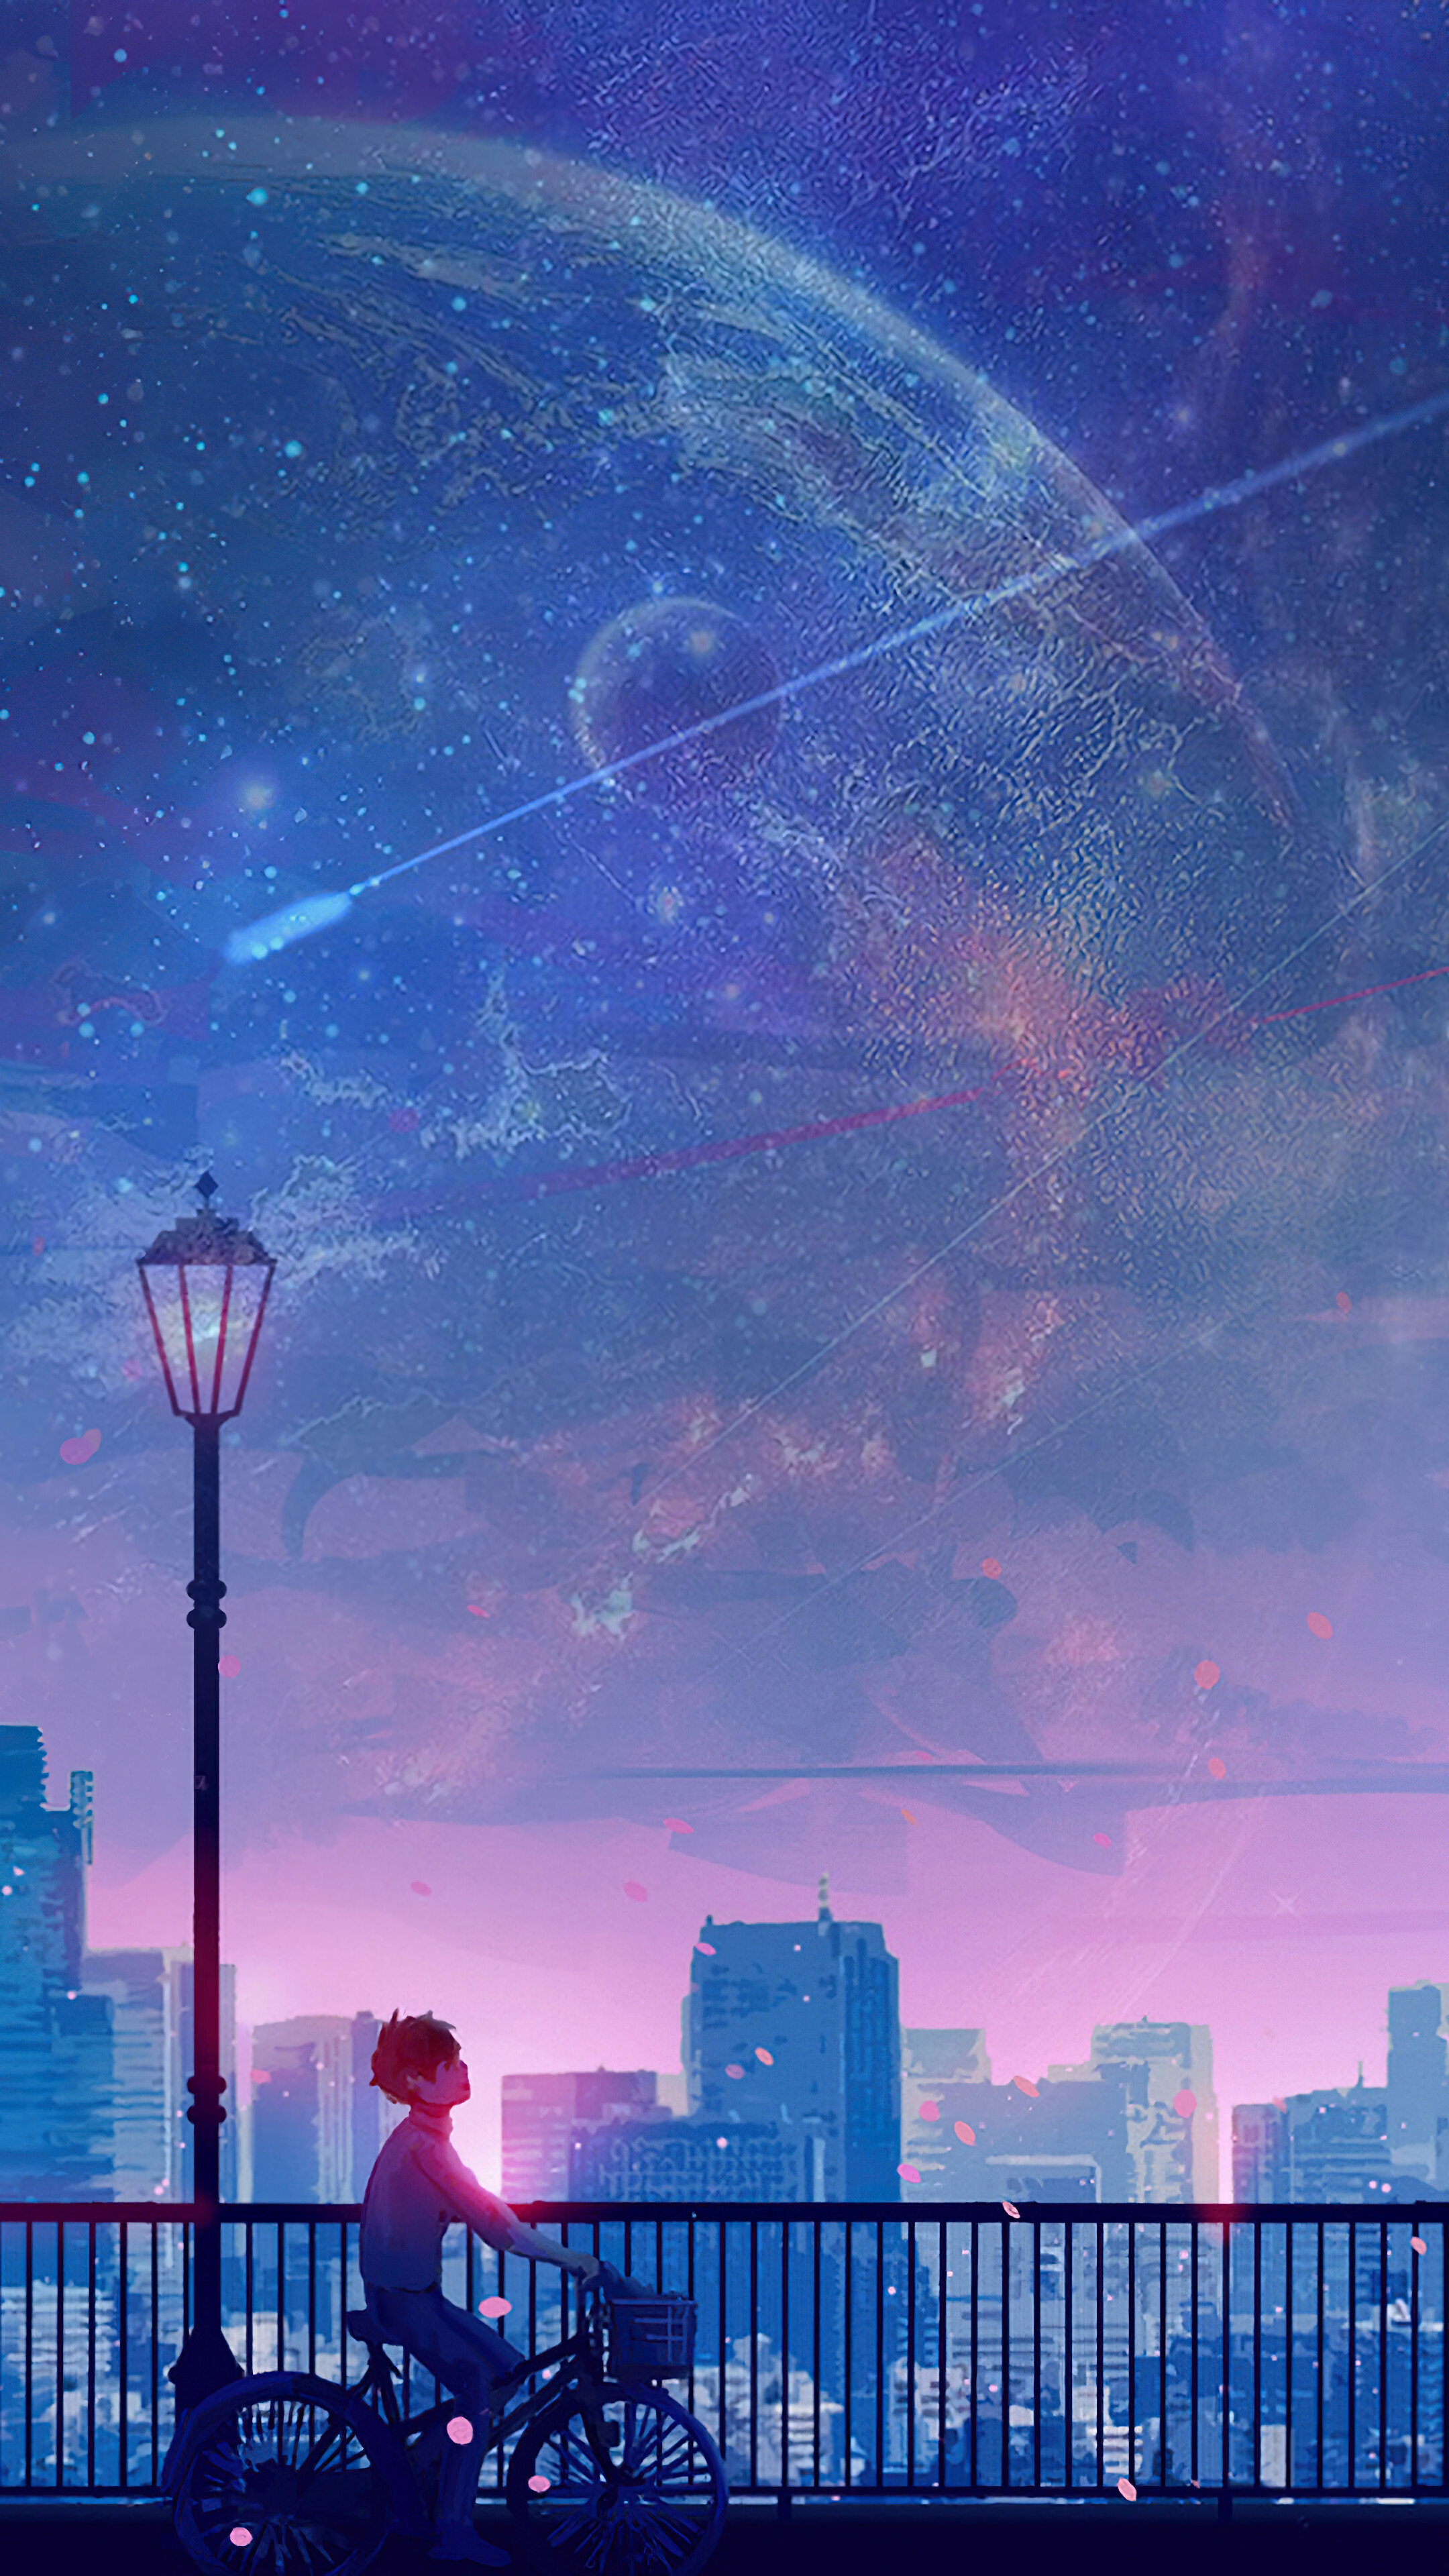 Anime Boy Riding Bicycle Moon Night City Scenery 4k Wallpaper